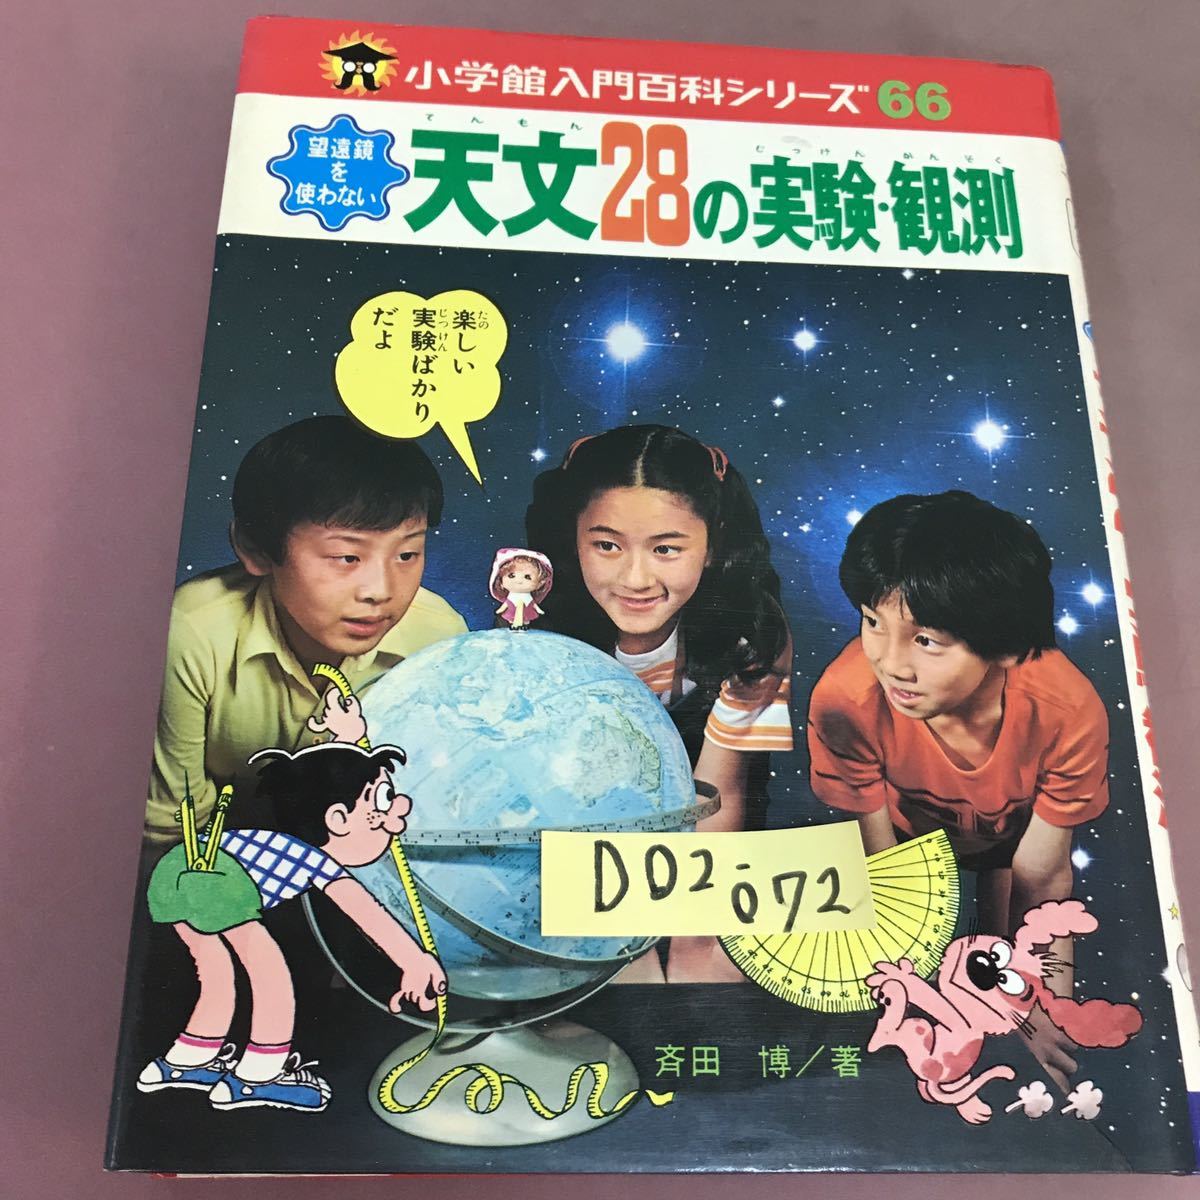 D02-072 introduction various subjects series 66 astronomy 28. experiment *.. Shogakukan Inc. 